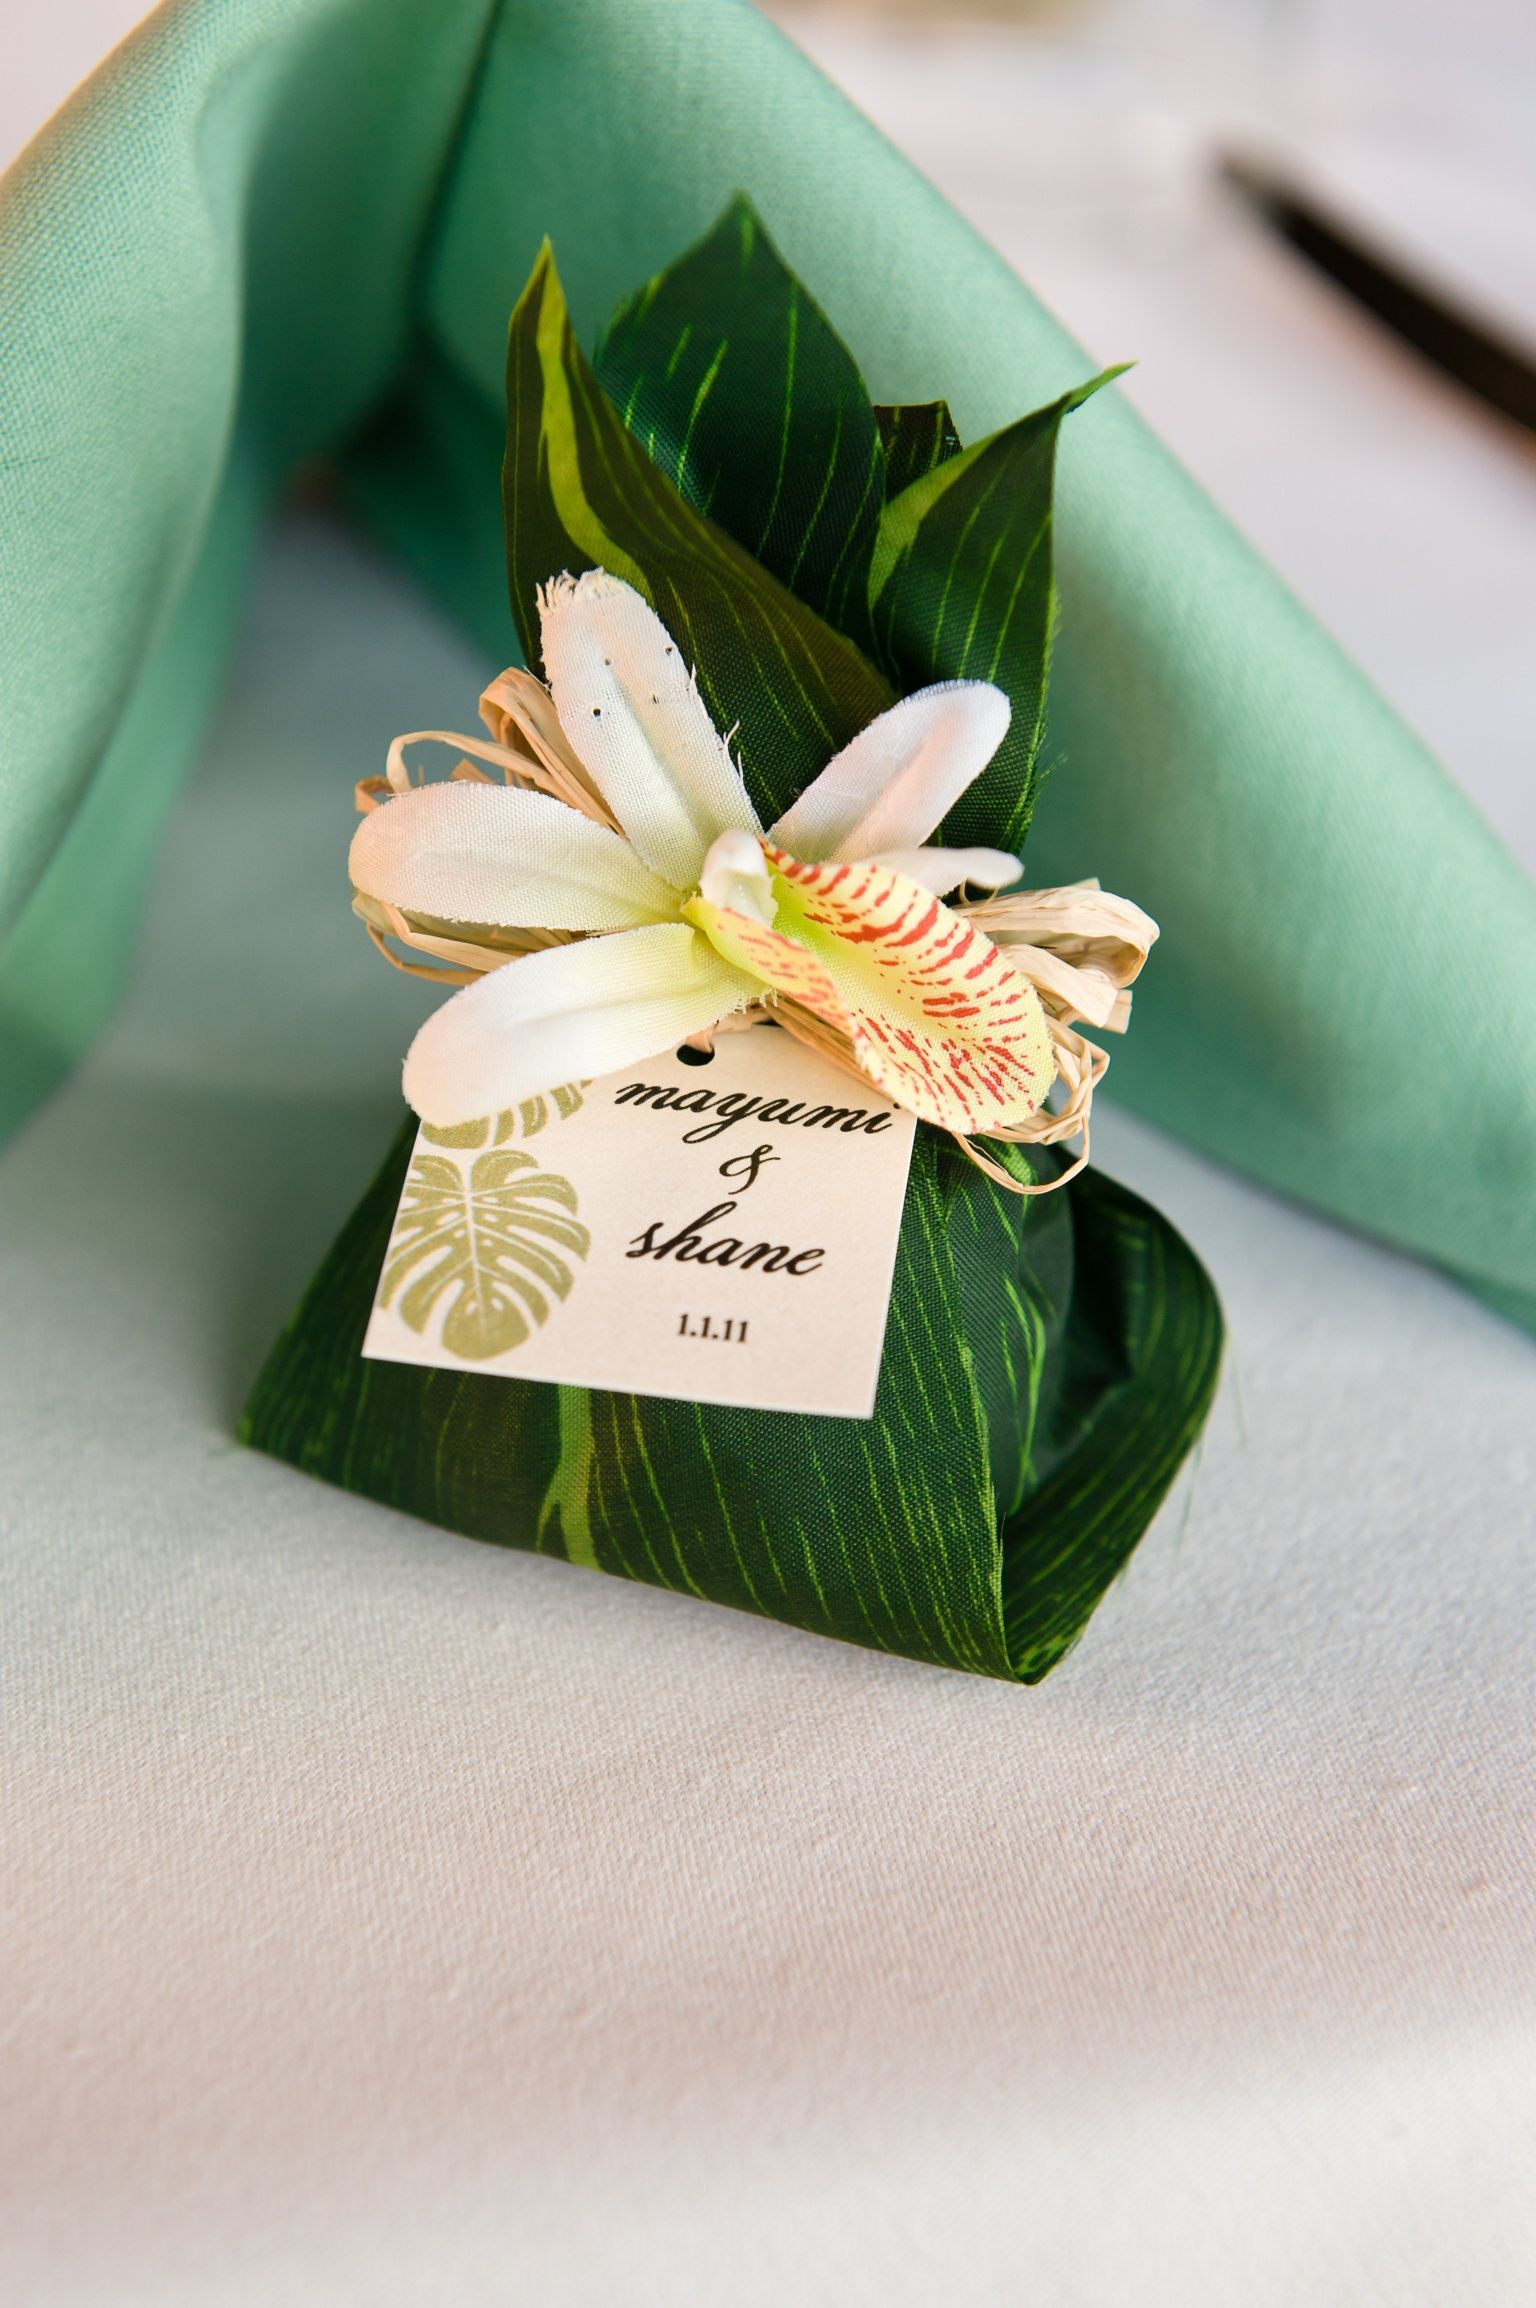 Hawaiian Wedding Gift Ideas
 Pin on CK Details Favors